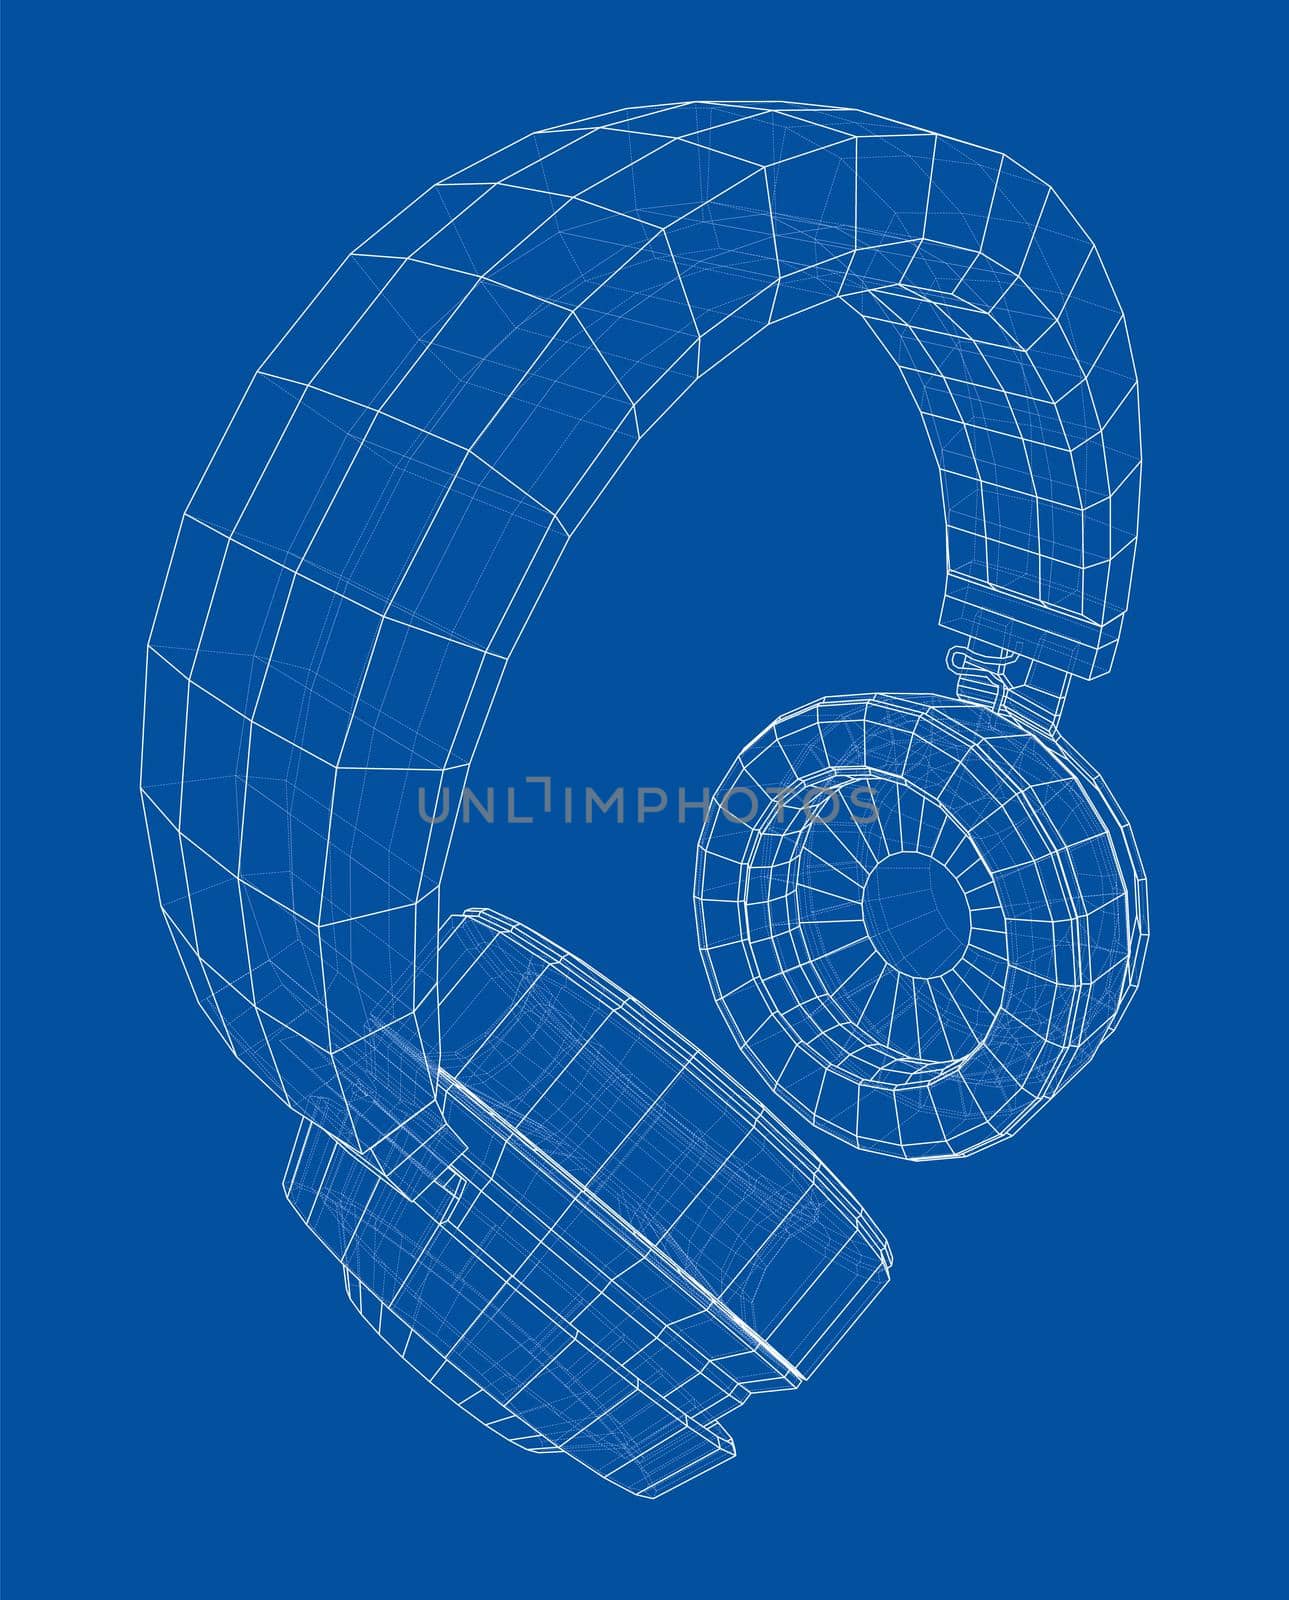 Headphones concept outline. 3d illustration. Wire-frame style